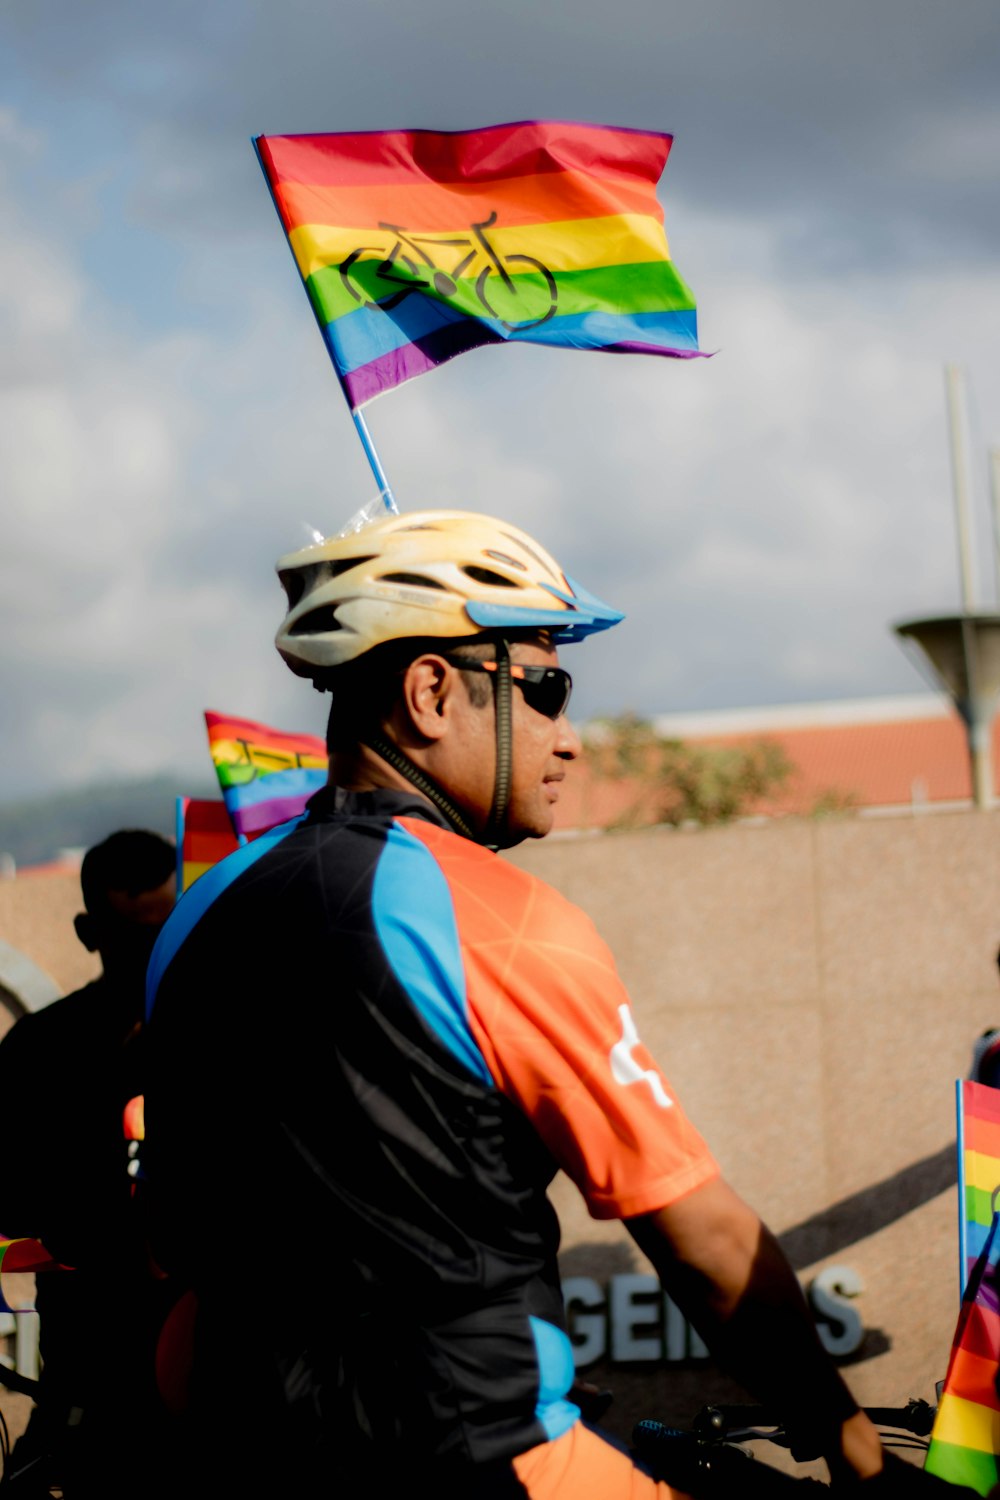 a man riding a bike holding a rainbow flag